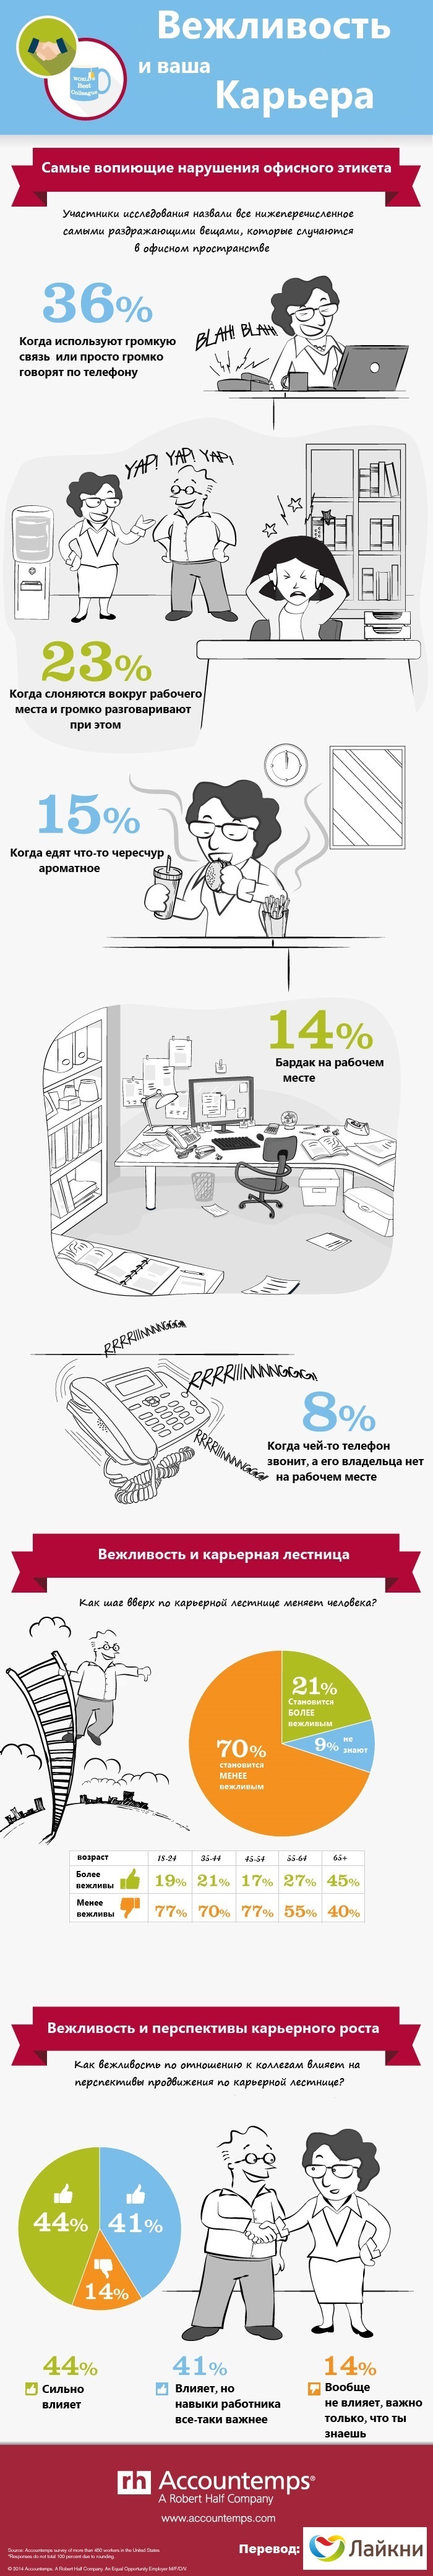 Accountemps_Workplace_Etiquette_Infographic.jpg